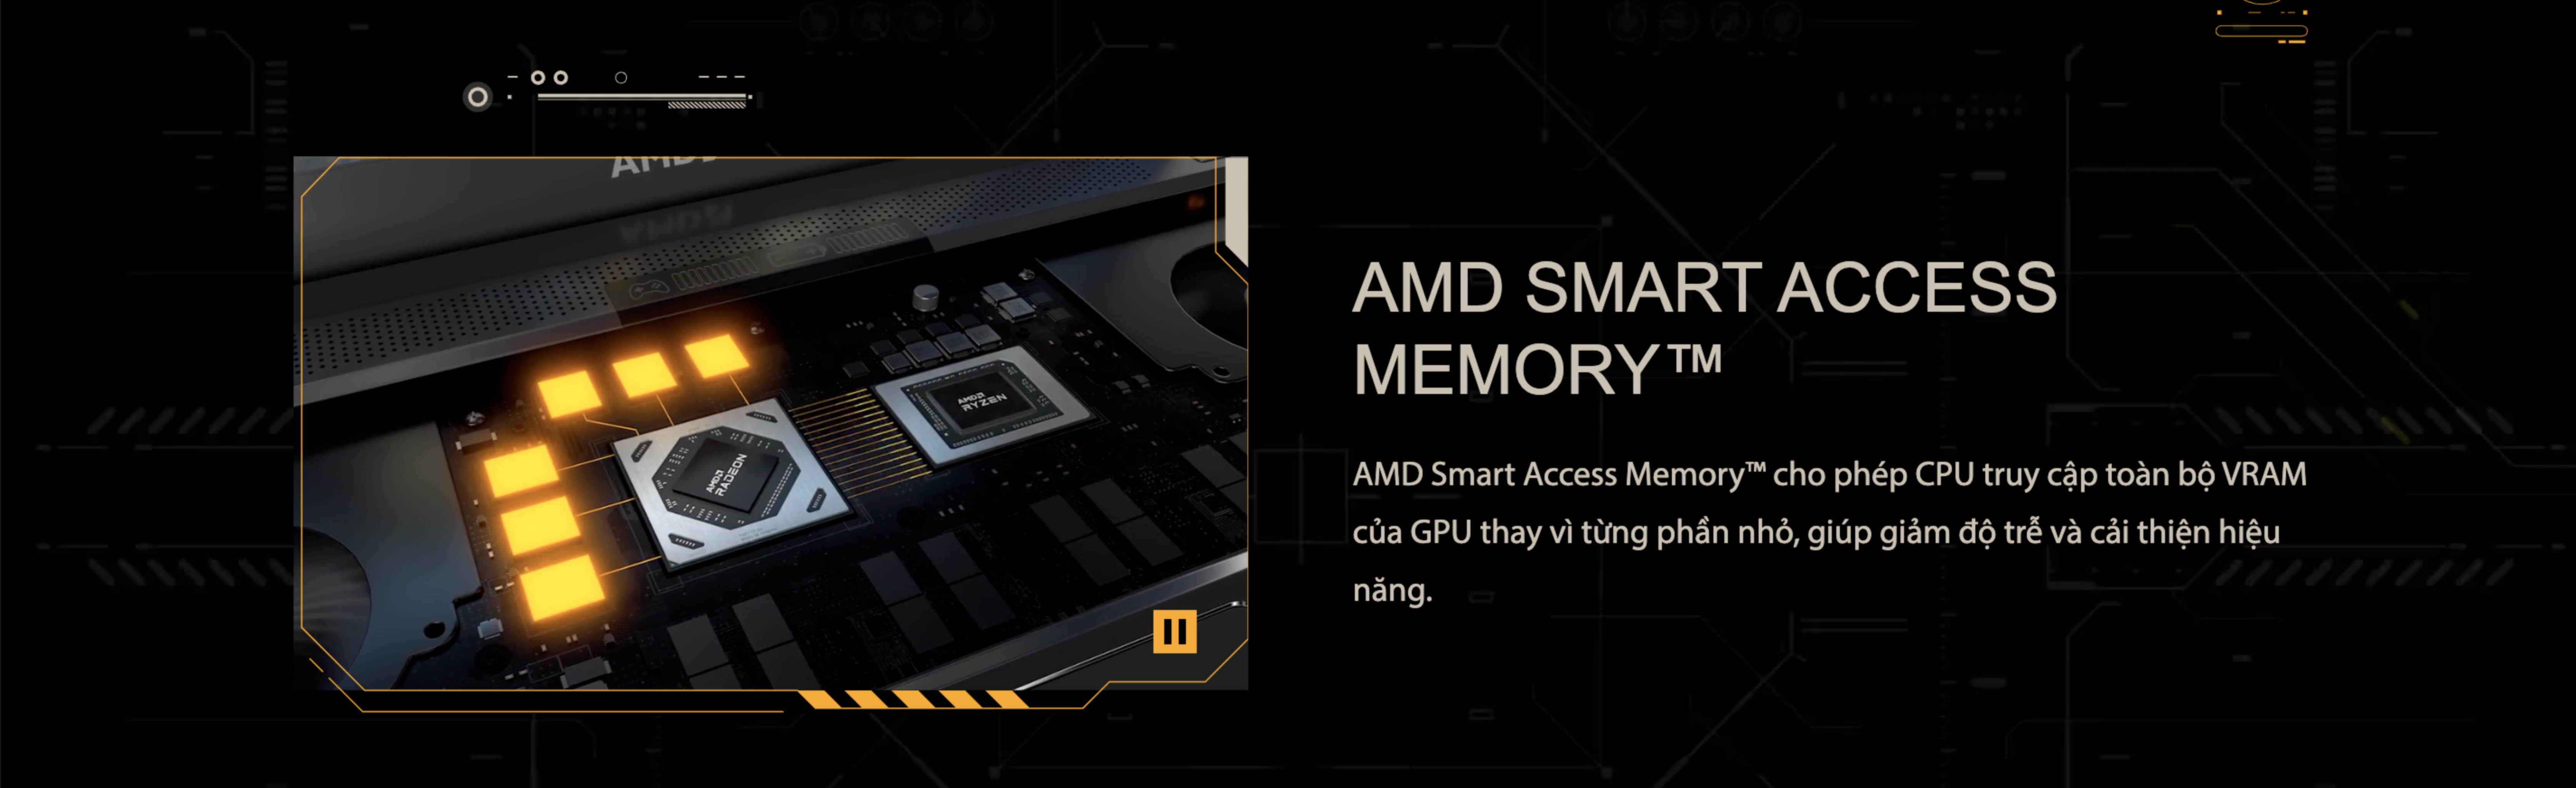 zentalk-AMD-SMART-ACCESS-MEMORY.png